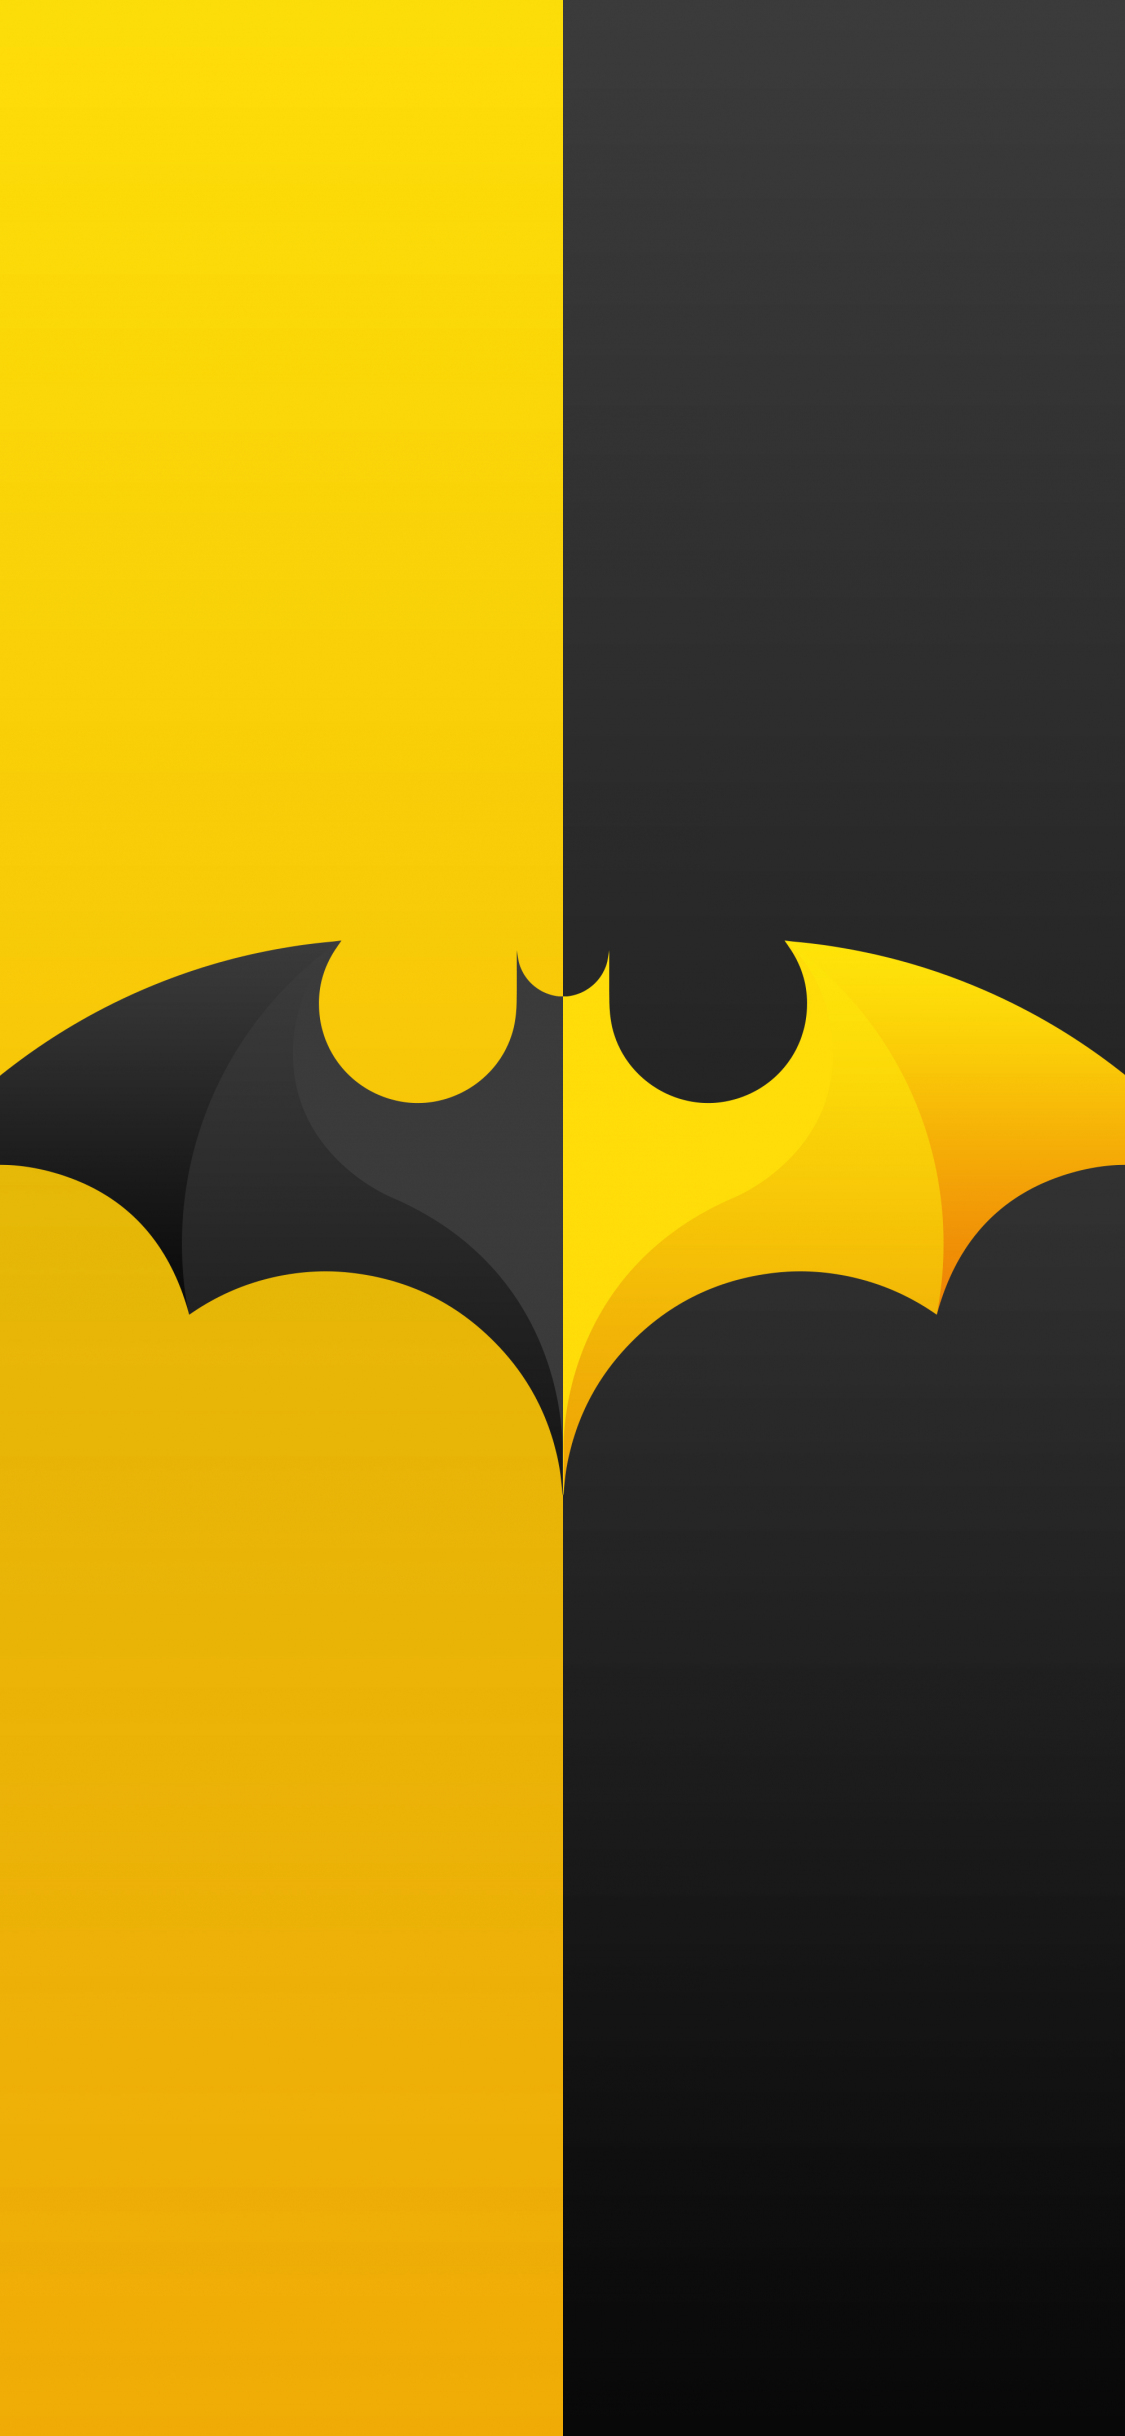 Batman Arkham City 2 iPhone 7 wallpaper - iPhone7wallpapers.co